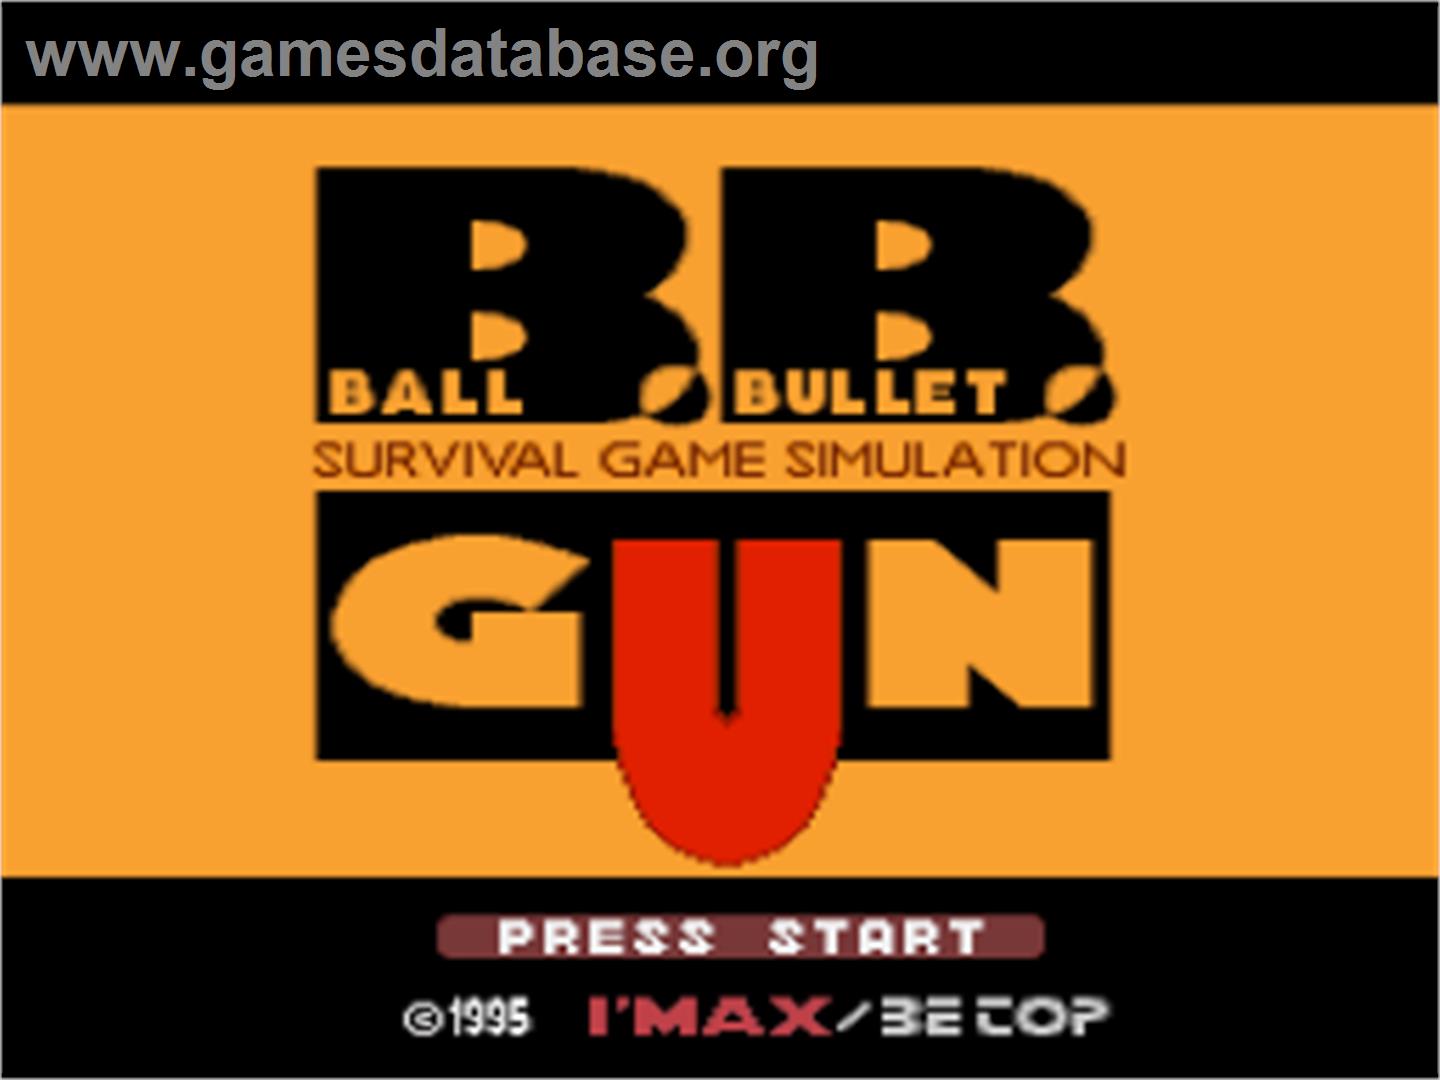 Ball Bullet Gun: Survival Game Simulation - Nintendo SNES - Artwork - Title Screen